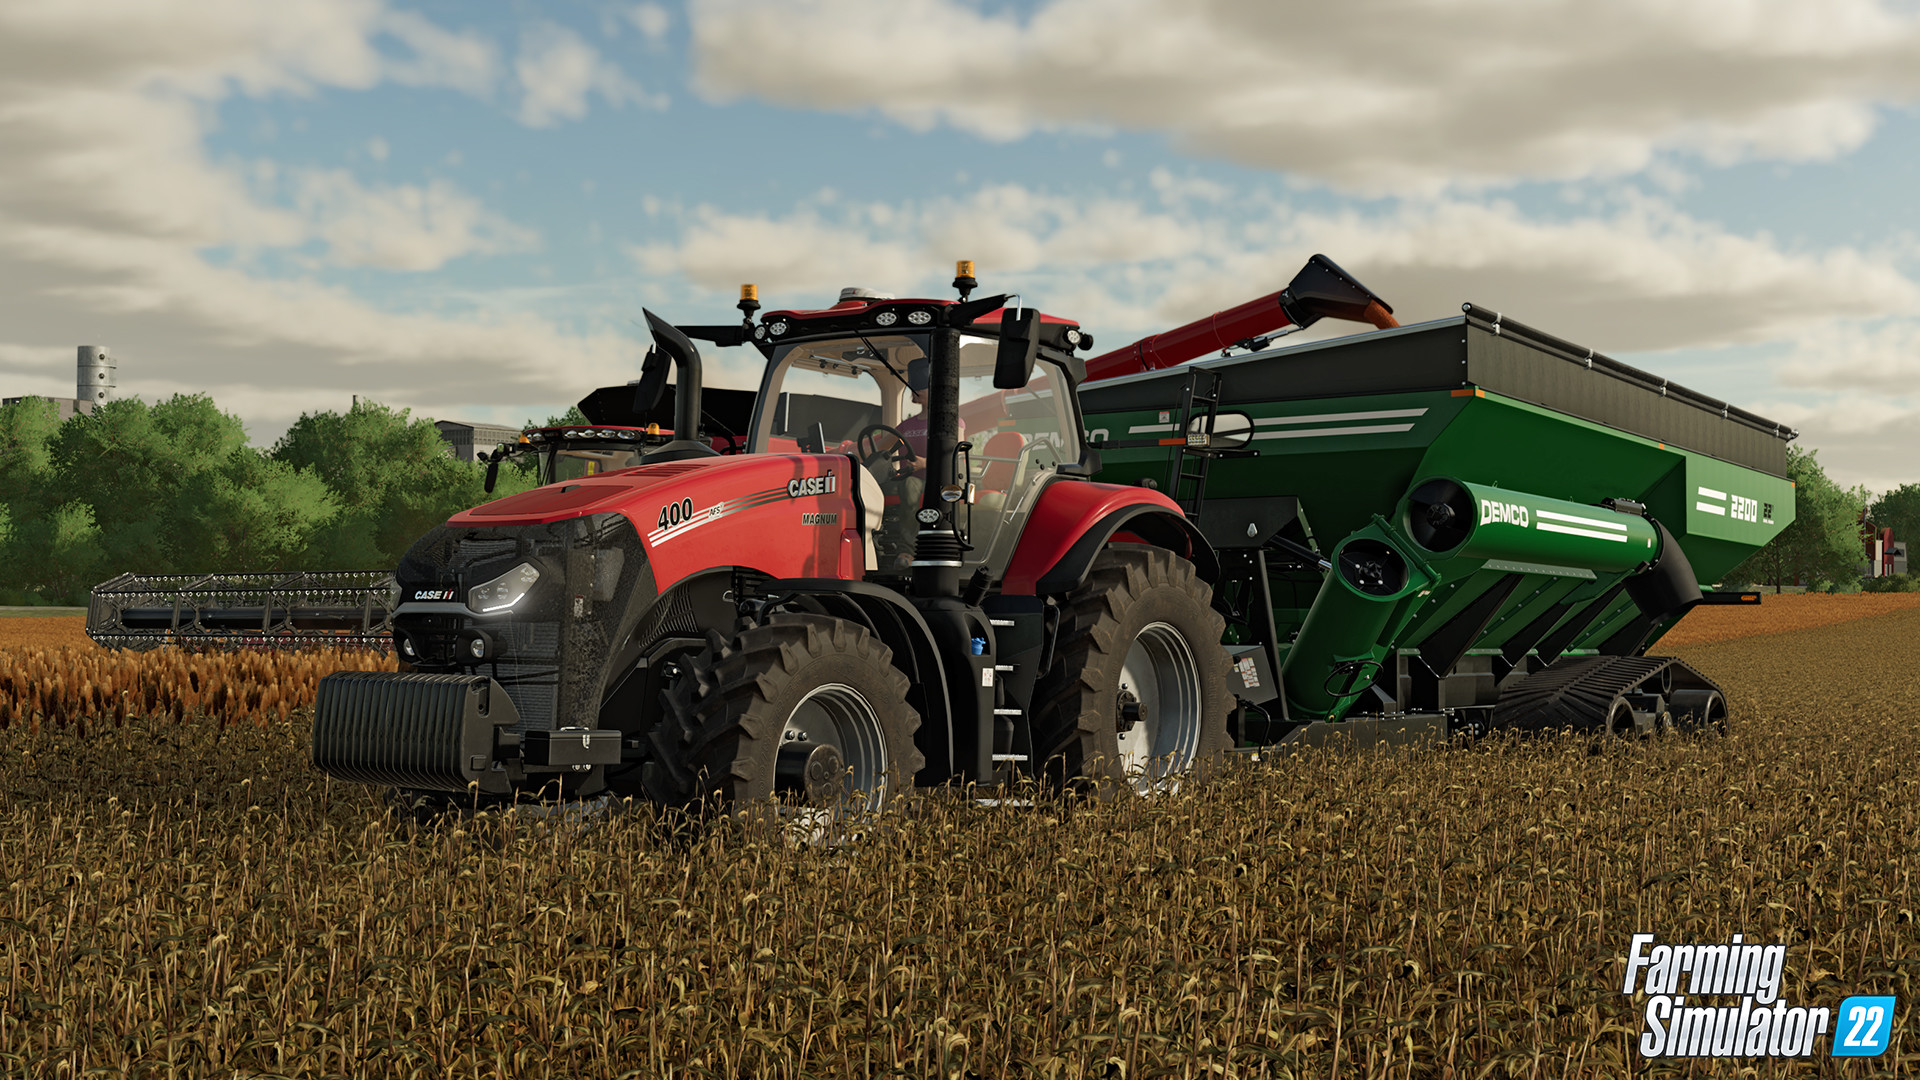 AMD’s FSR 3 technology has arrived in Farming Simulator 22